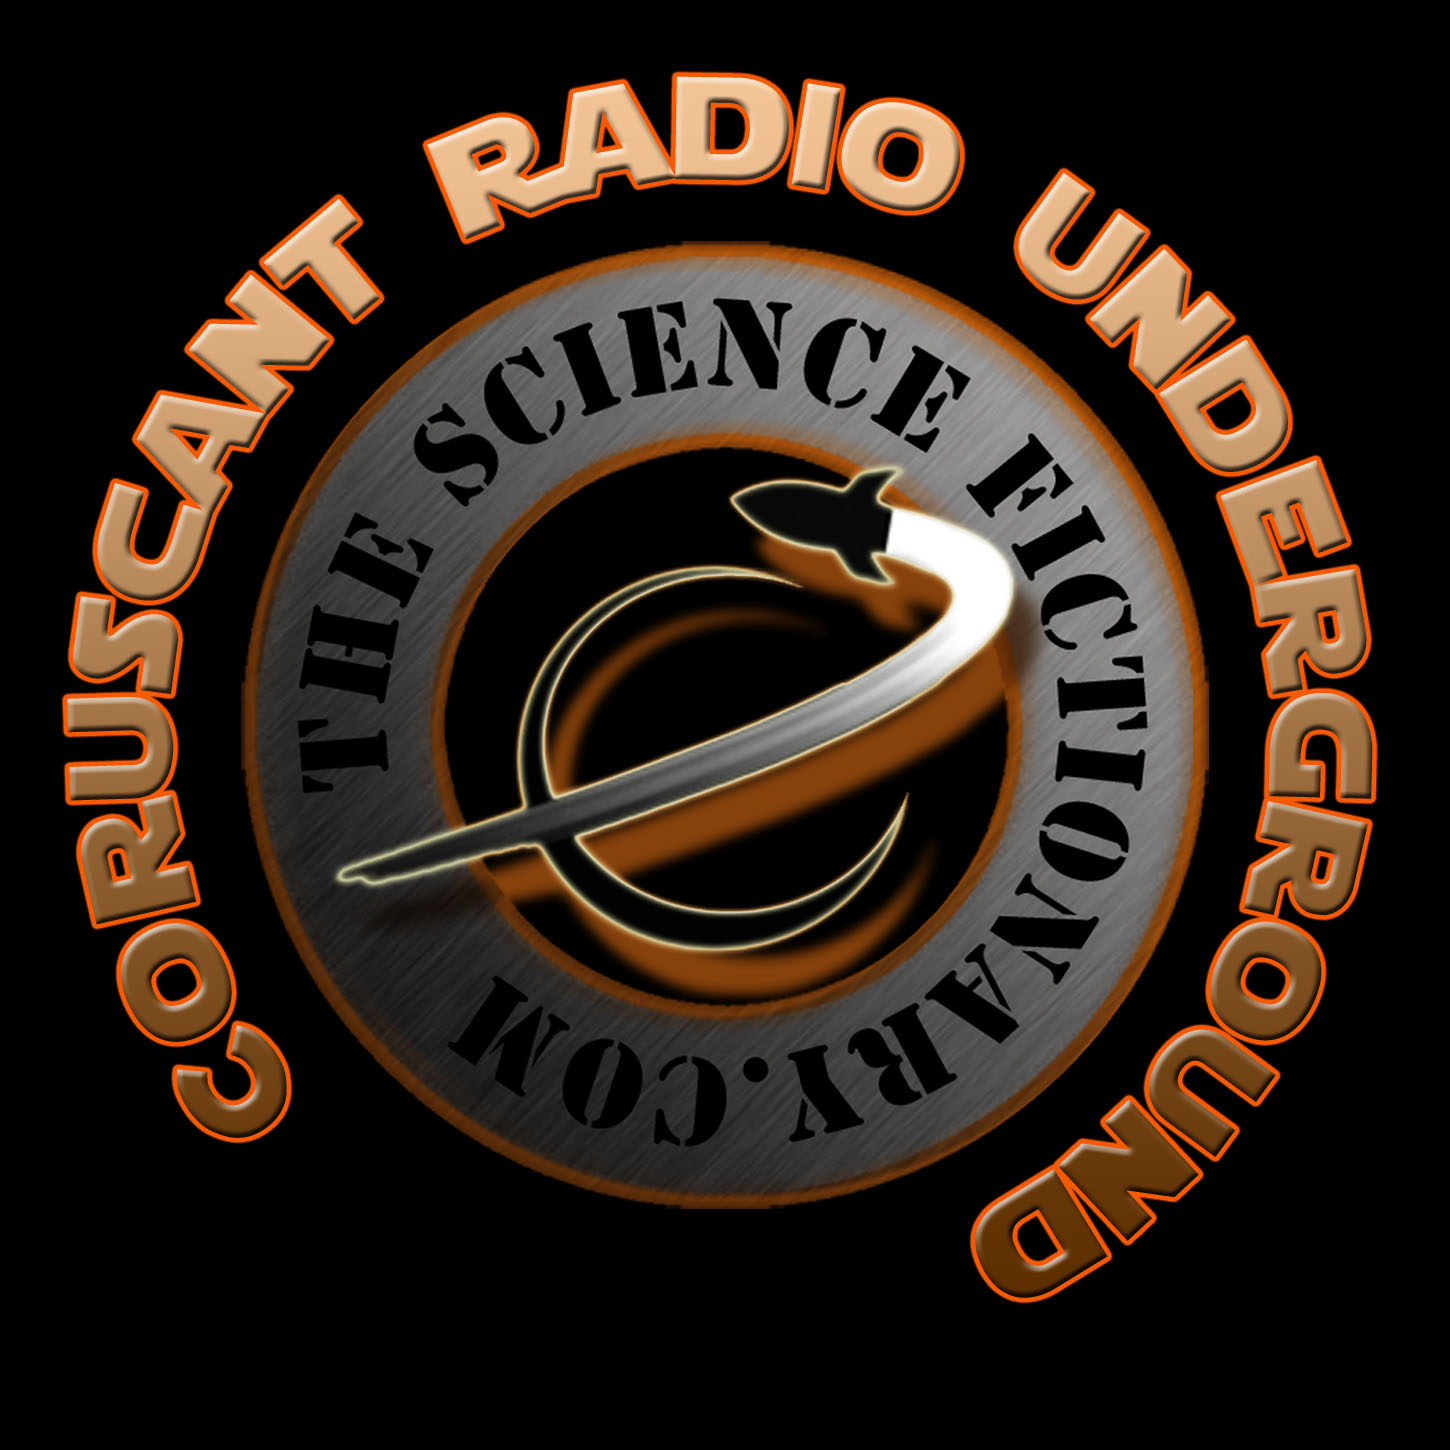 Episode 1:  Welcome to Coruscant Radio Underground